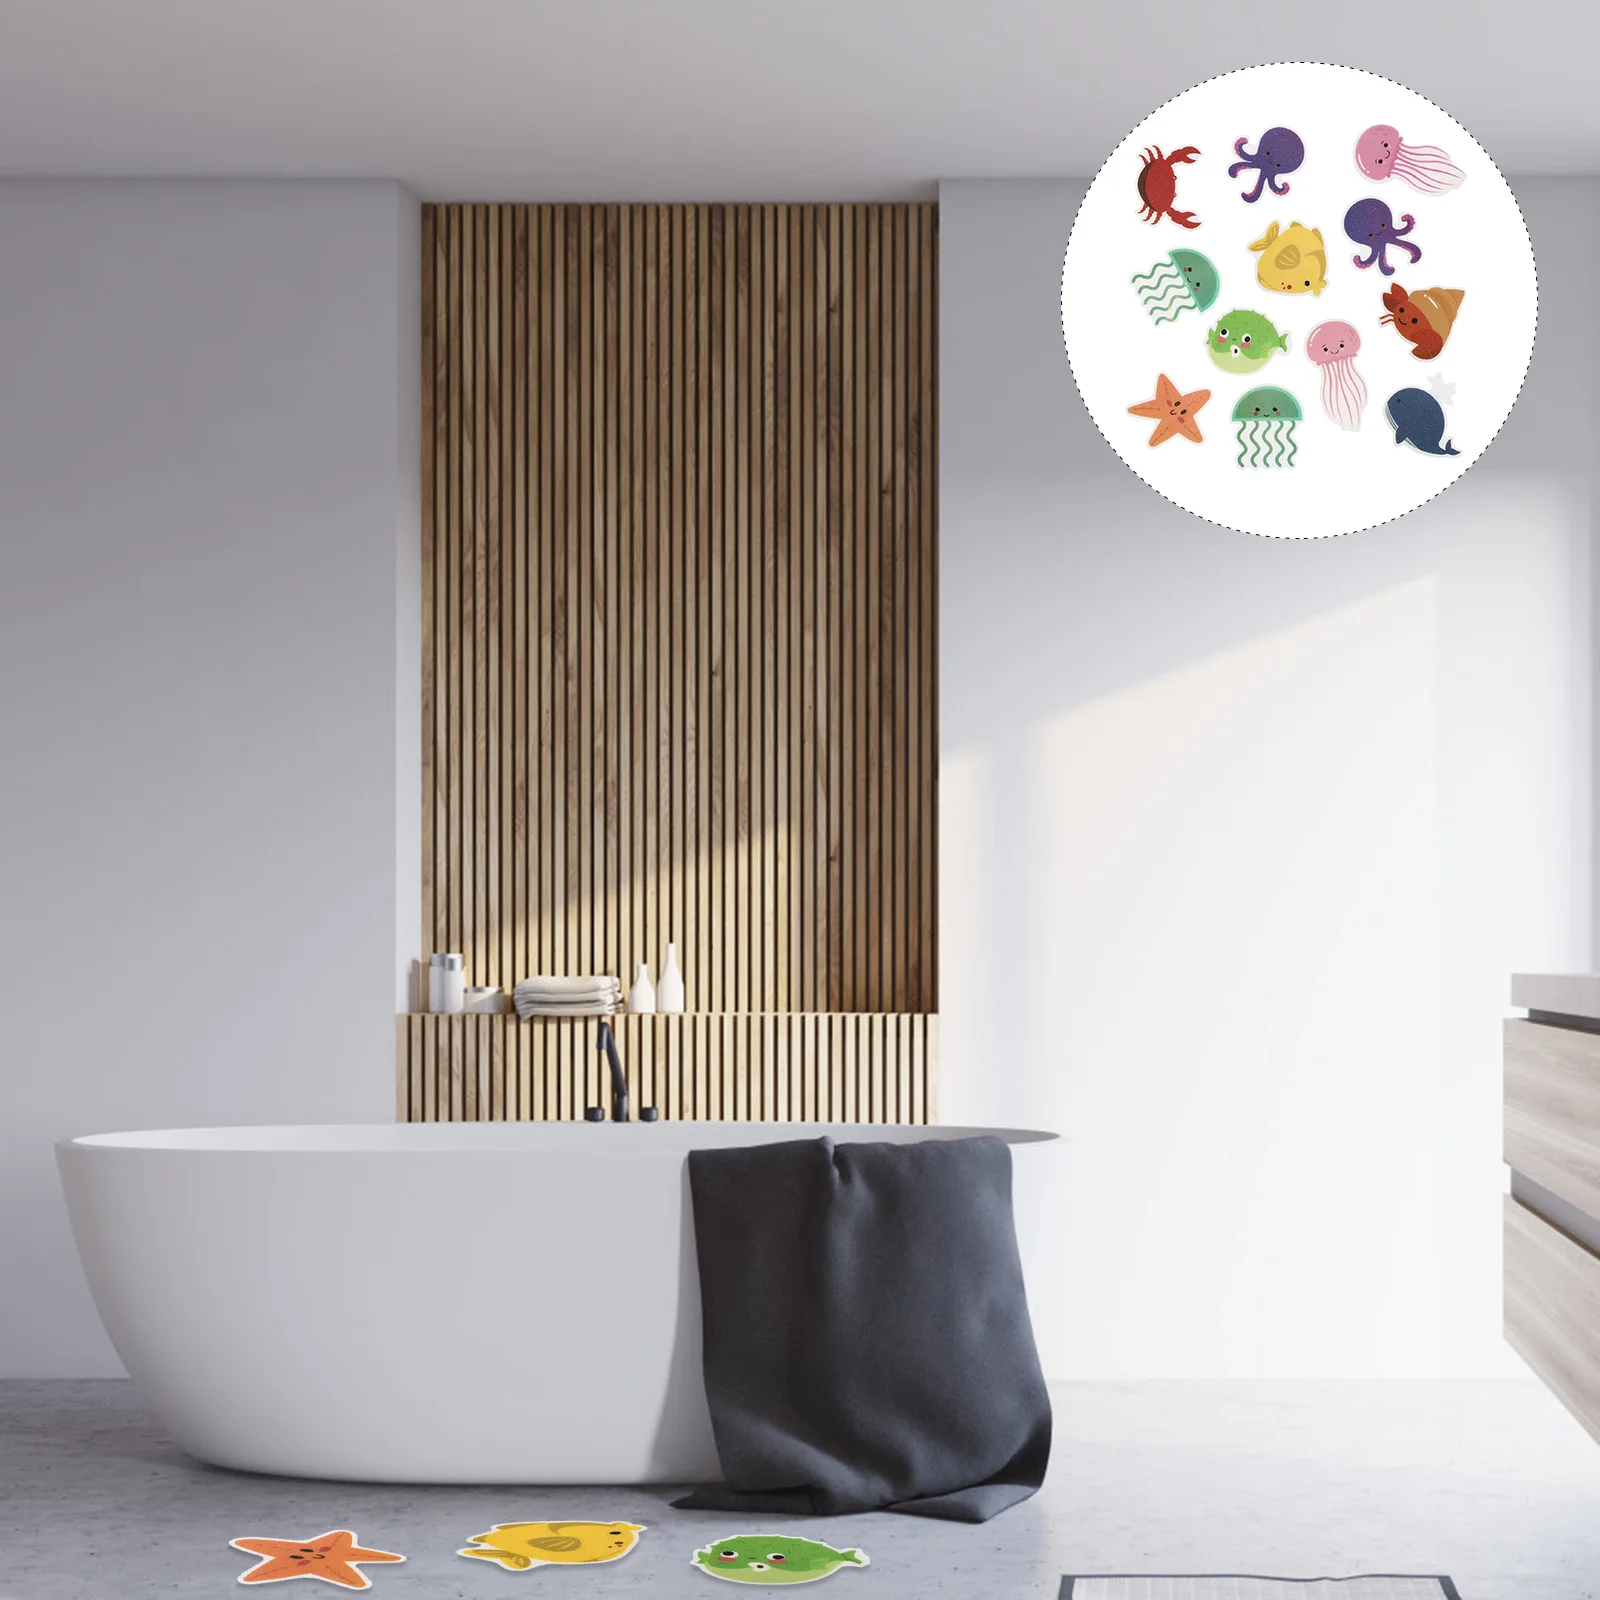 

Stickersbathtub Non Shower Anti Bathroomtub Adhesive Kids Applique Grips Sea Animal Waterproofdecals Bath Floor Mats Textured